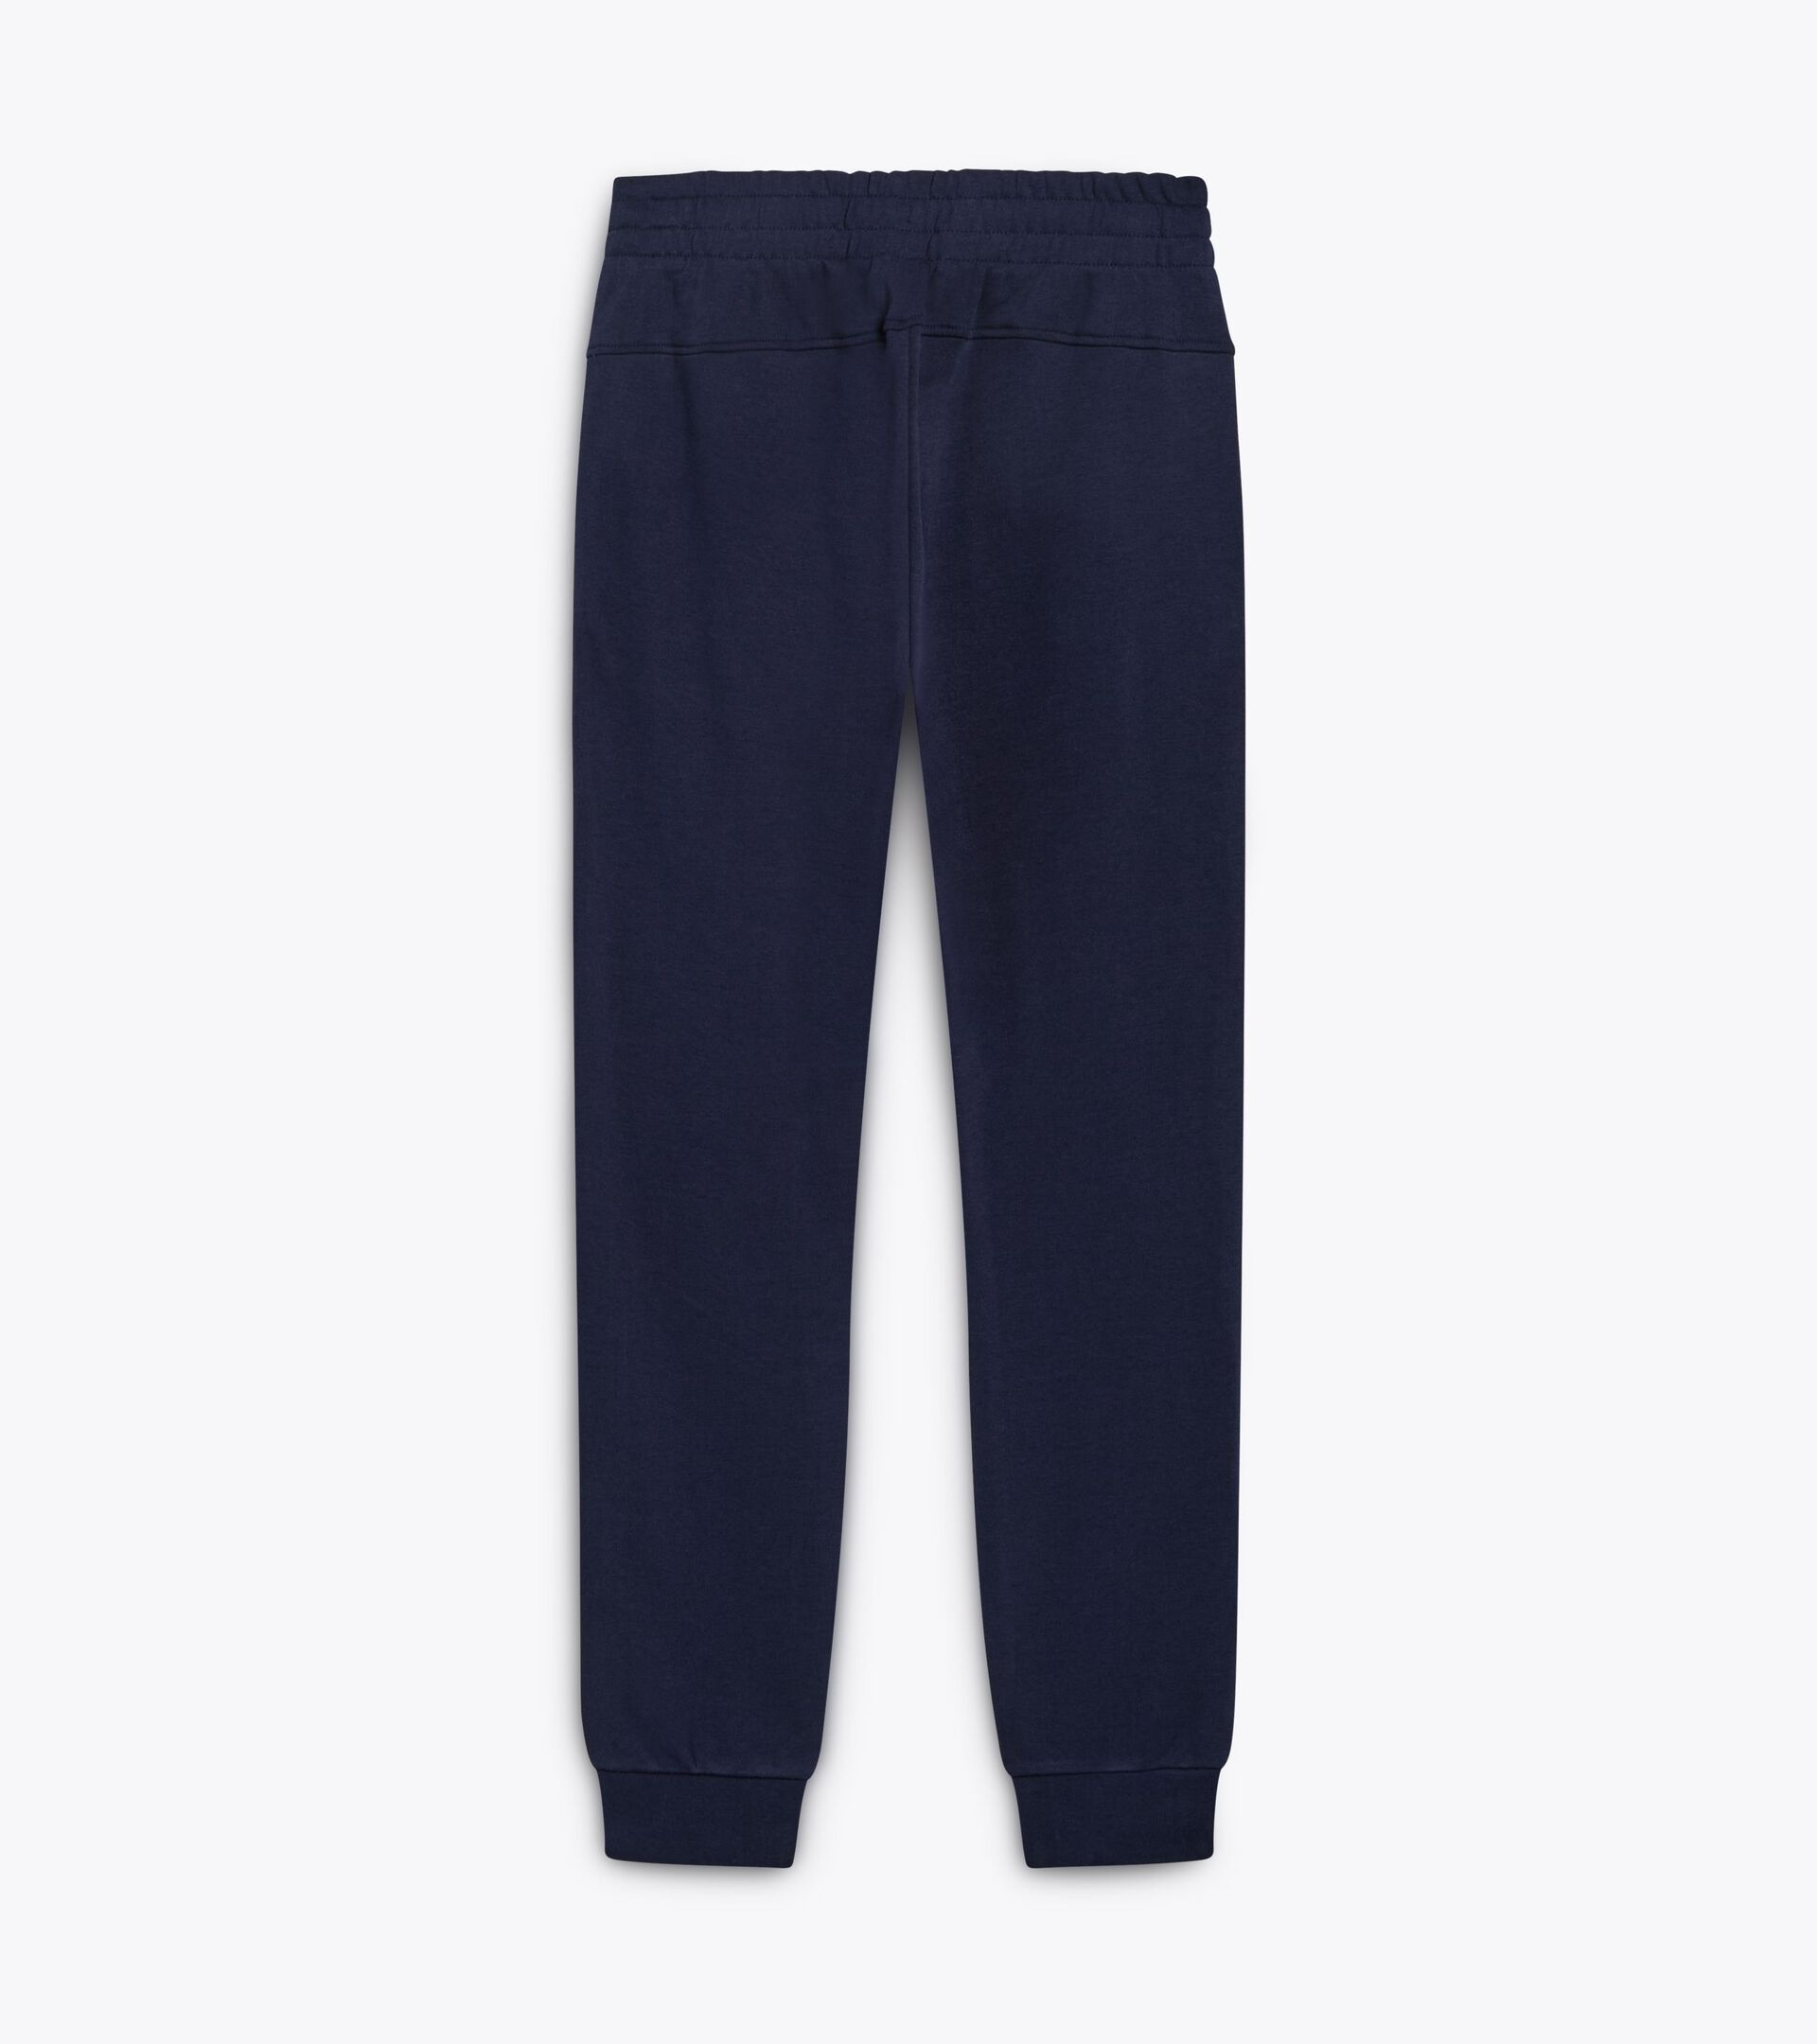 Cotton sweatpants - Men’s
 PANTS CUFF CORE CLASSIC NAVY - Diadora